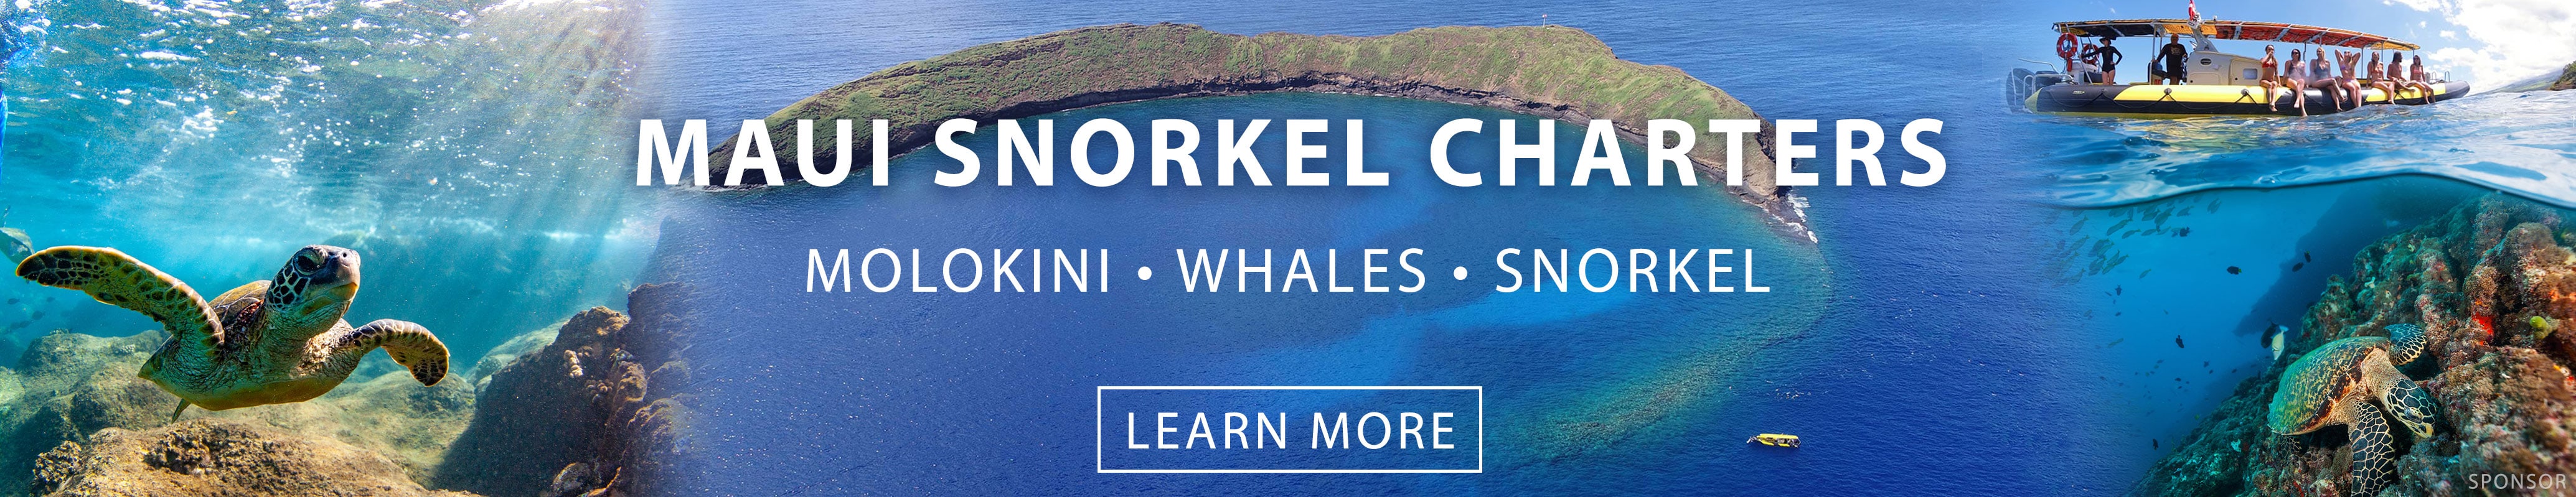 Maui Snorkel Charters